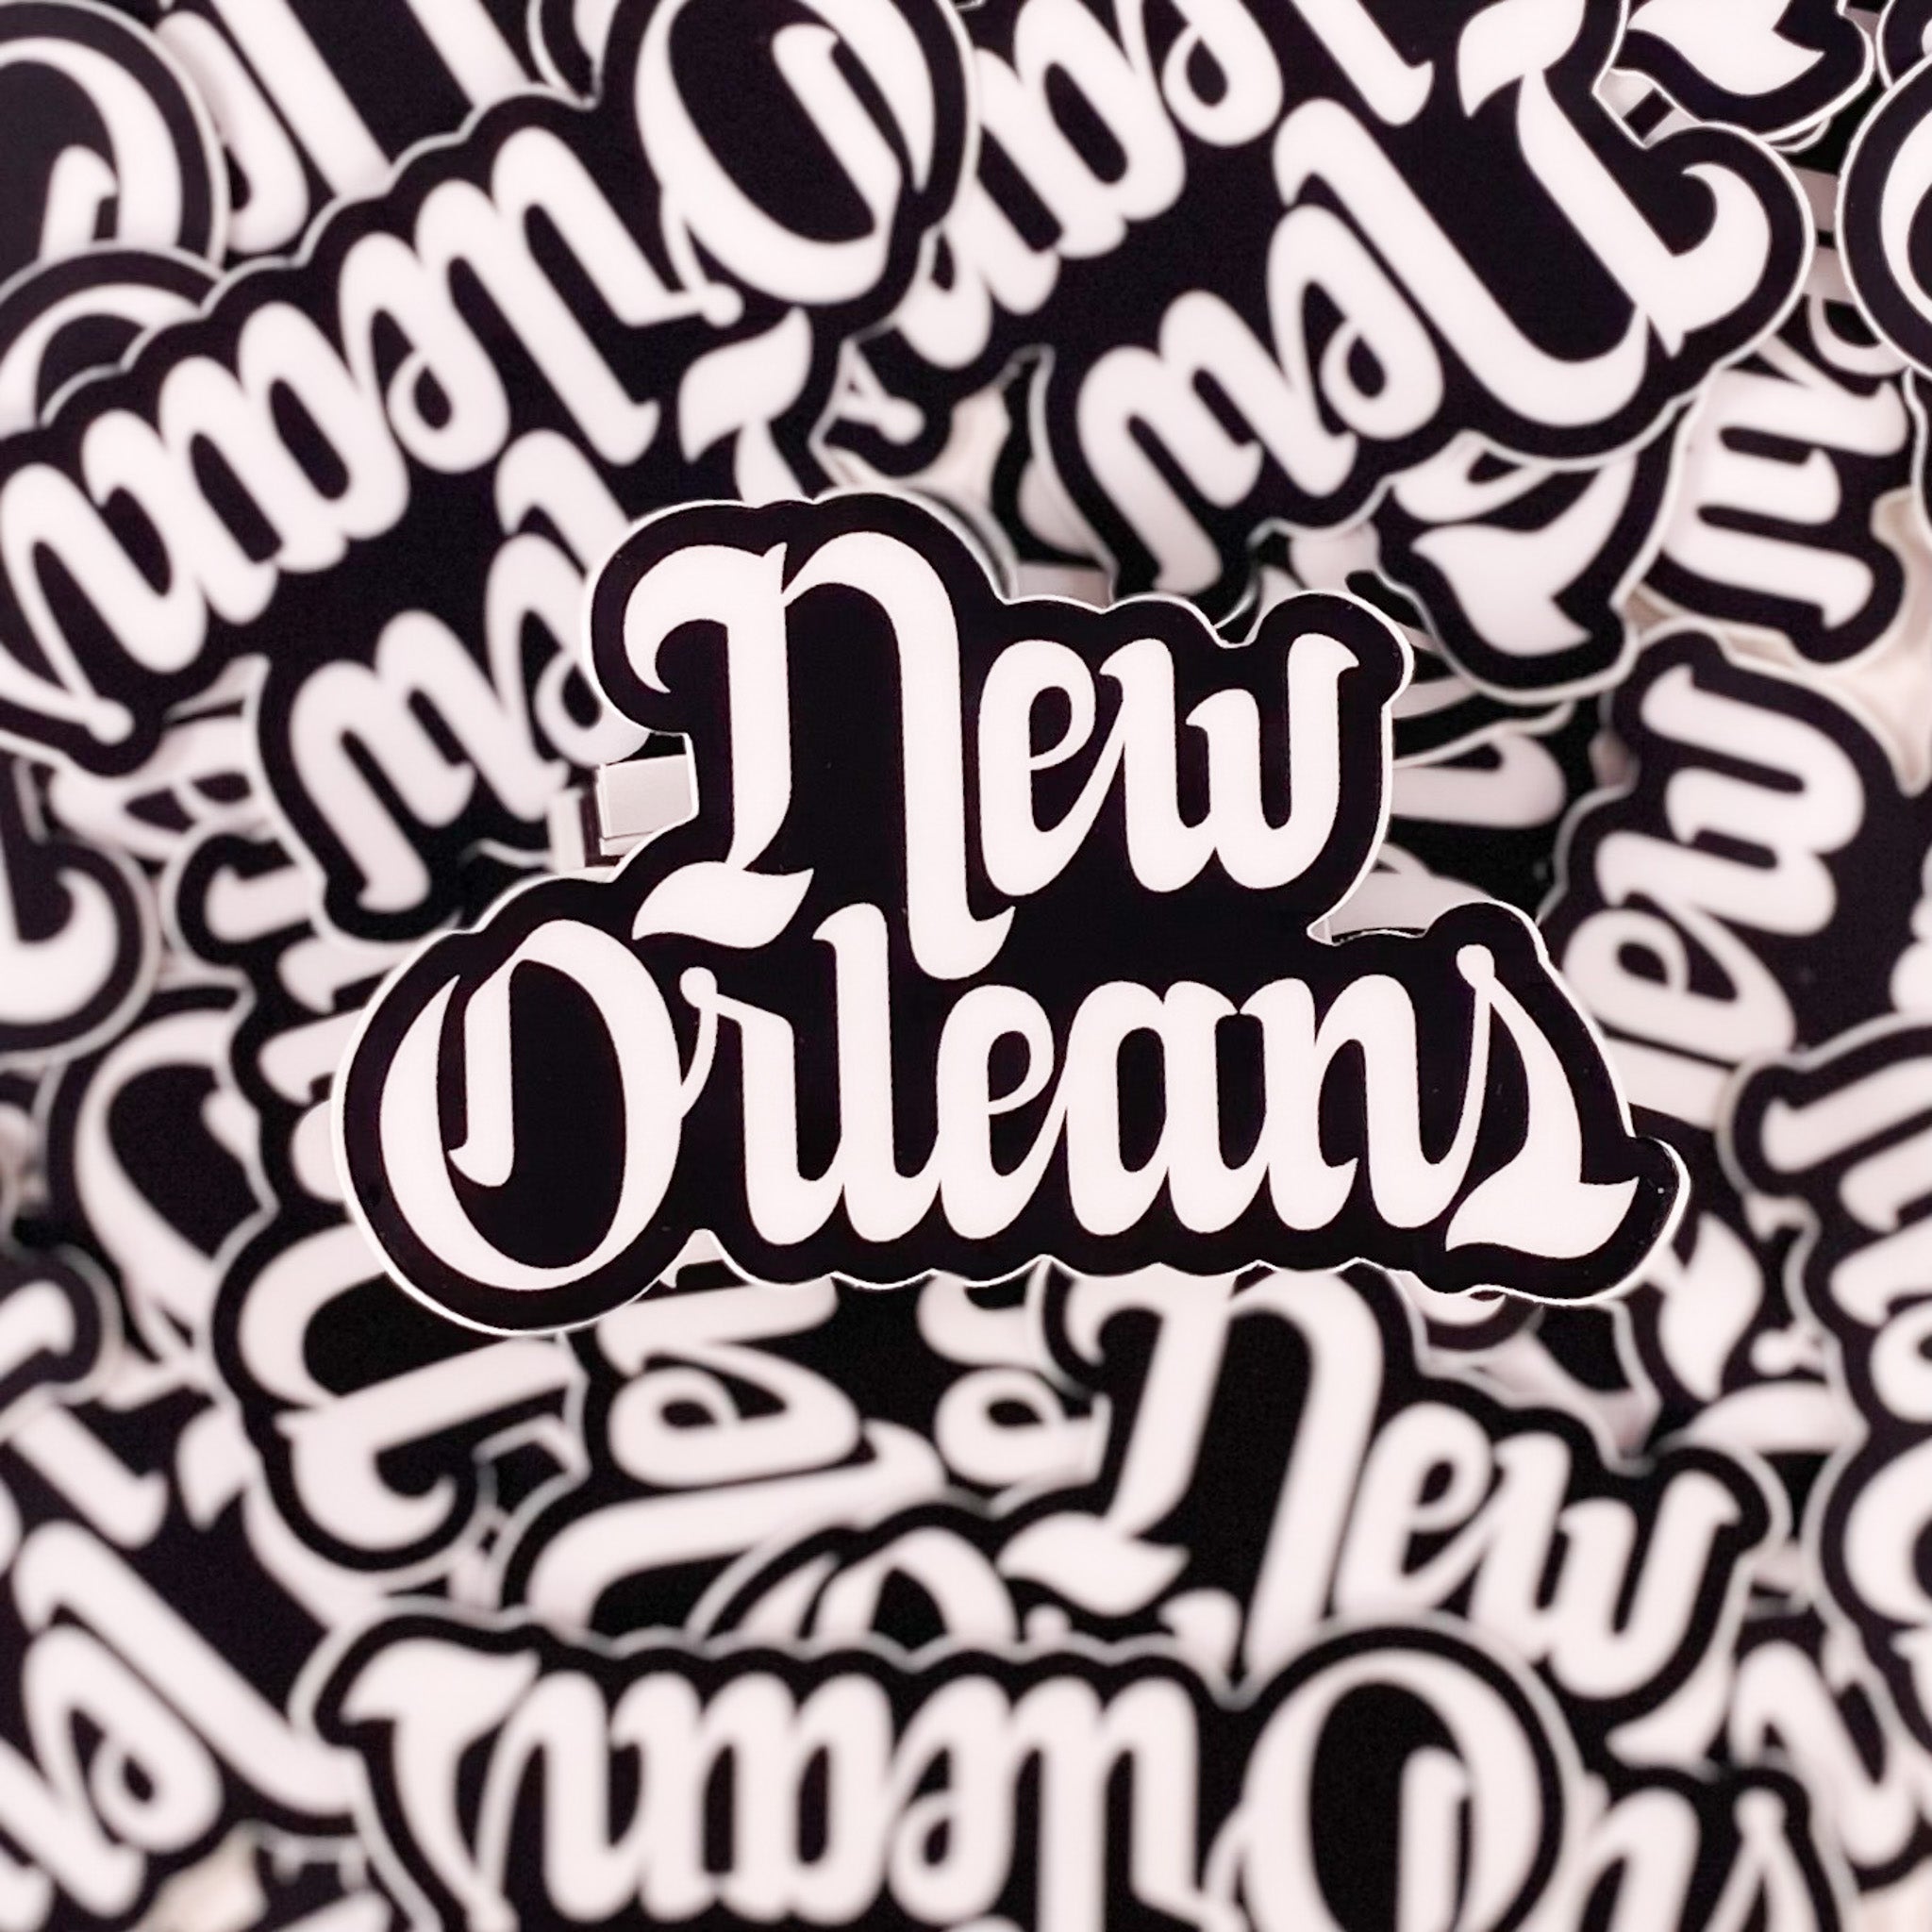 New Orleans sticker - Dirty Coast Press